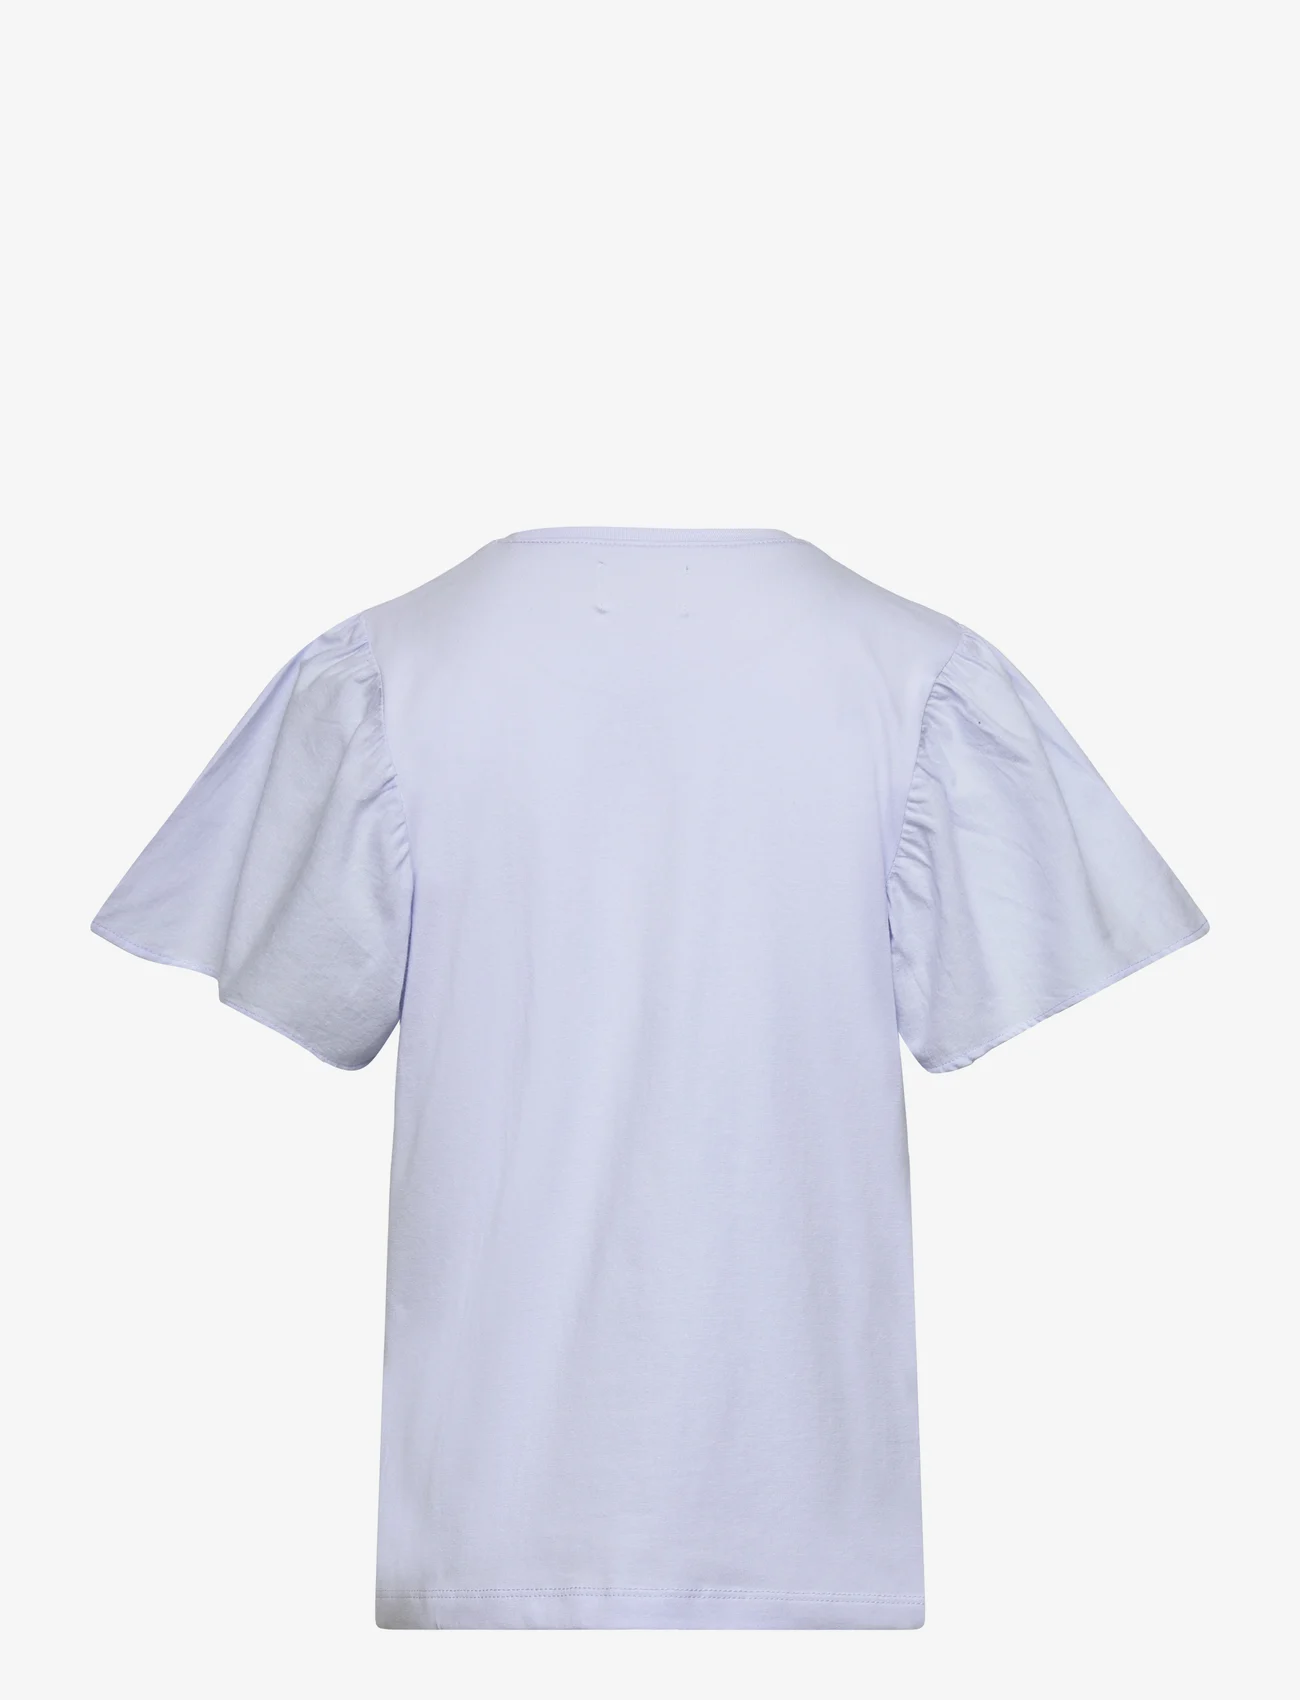 Creamie - T-shirt SS Woven - lyhythihaiset - xenon blue - 1